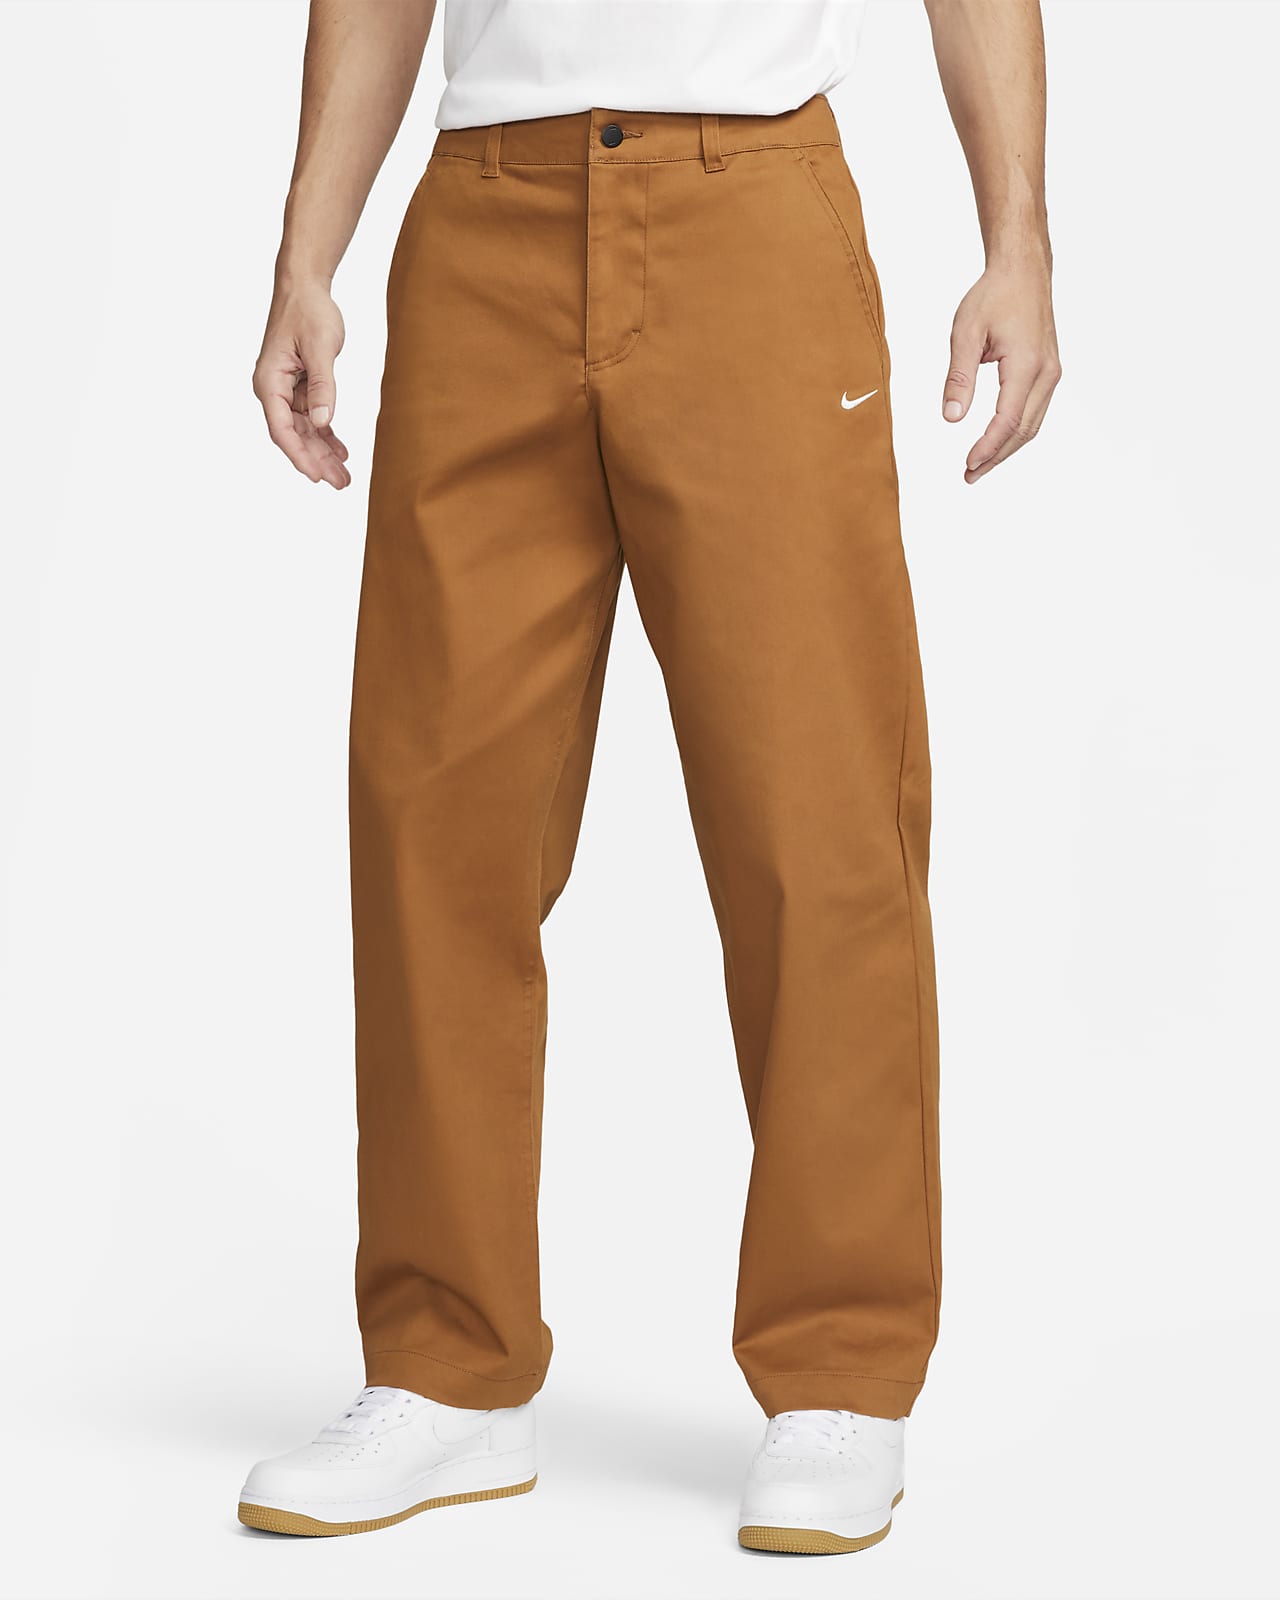 Pantaloni El Chino Nike Life – Uomo